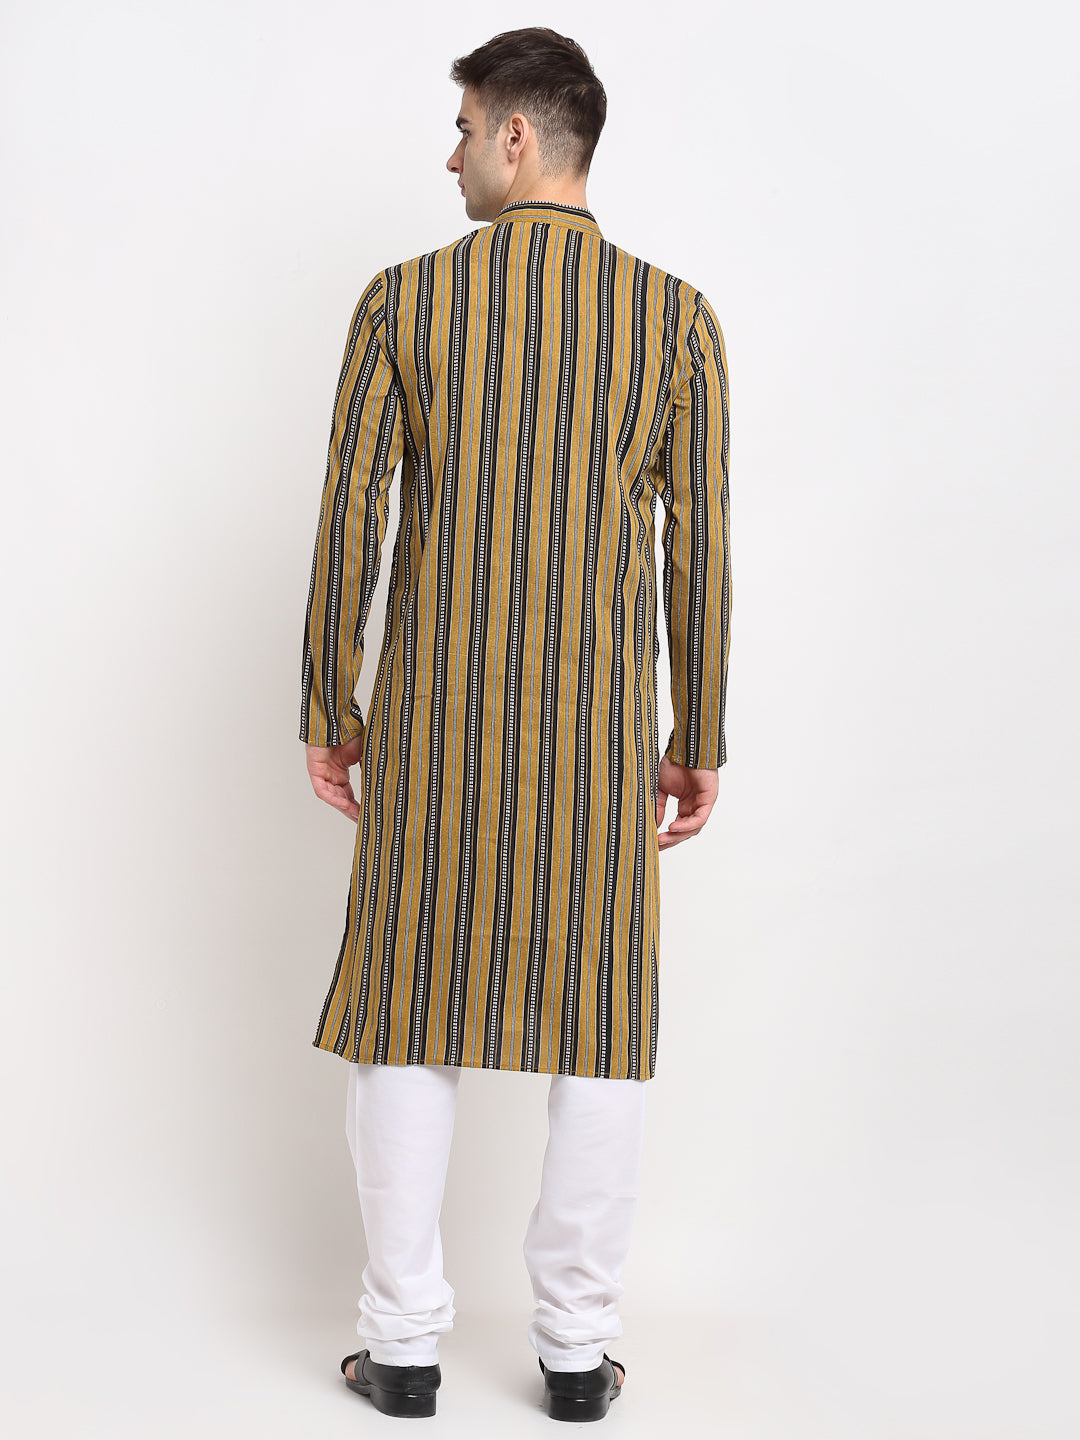 Jompers Men's Mustard Cotton Striped Kurta Payjama Sets